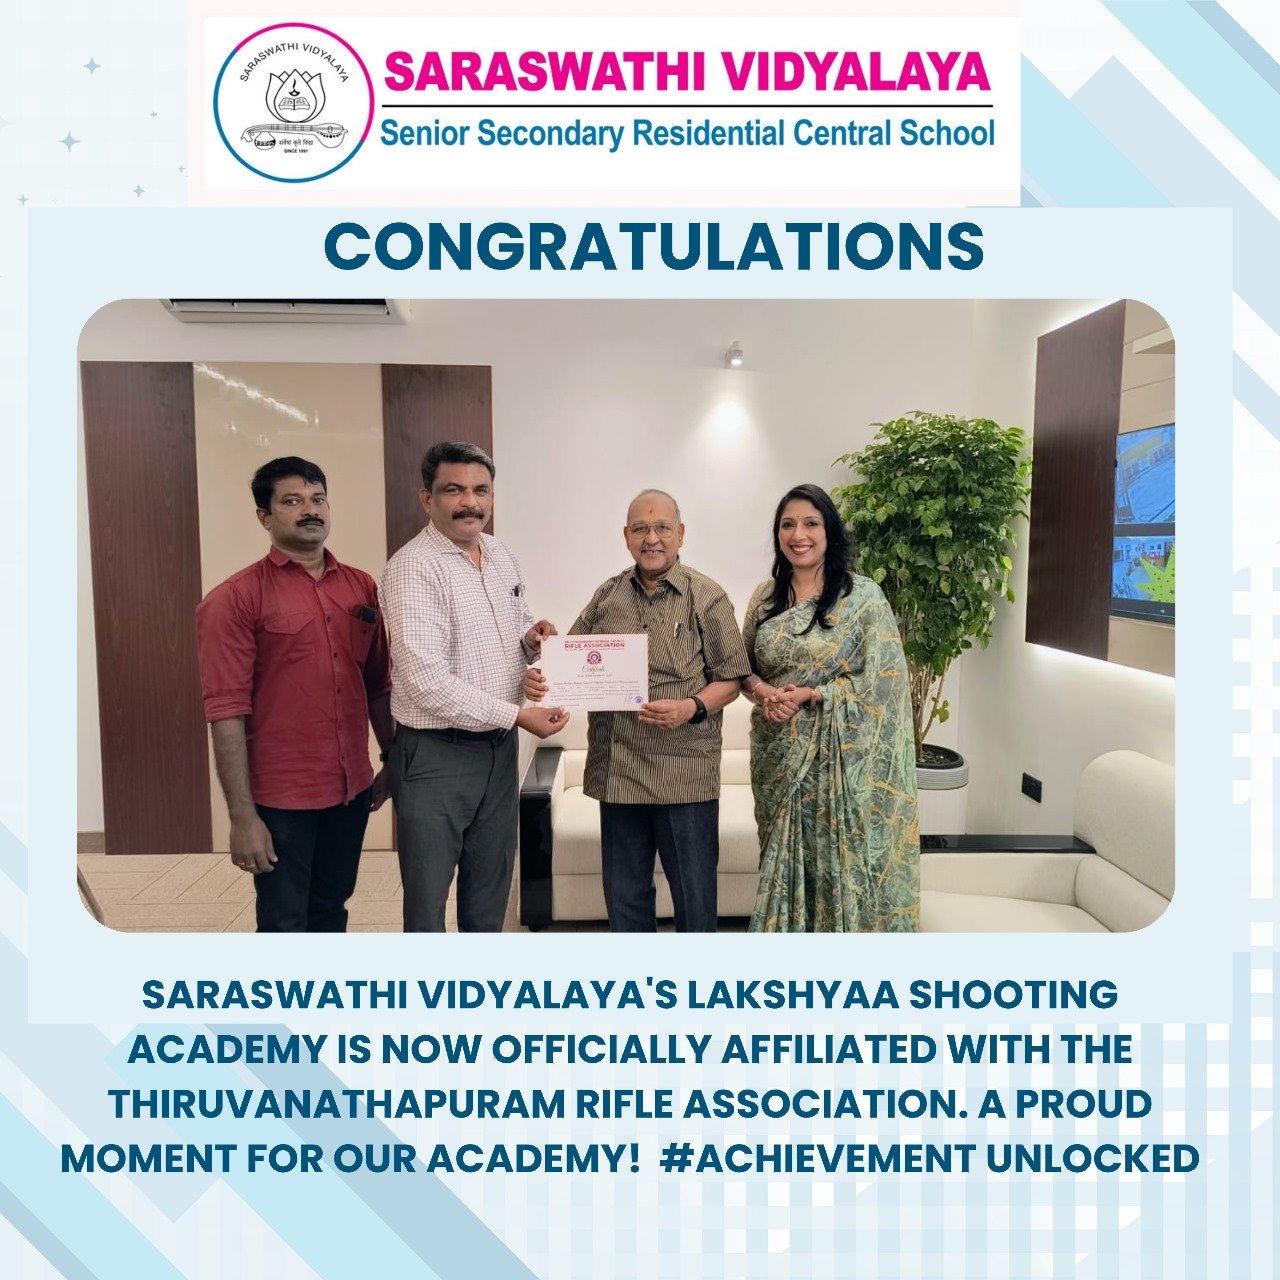 Saraswathi Vidyalayas Lakshyaa Shooting Academy is now officially affiliated with the Thiruvanathapuram Rifle Association